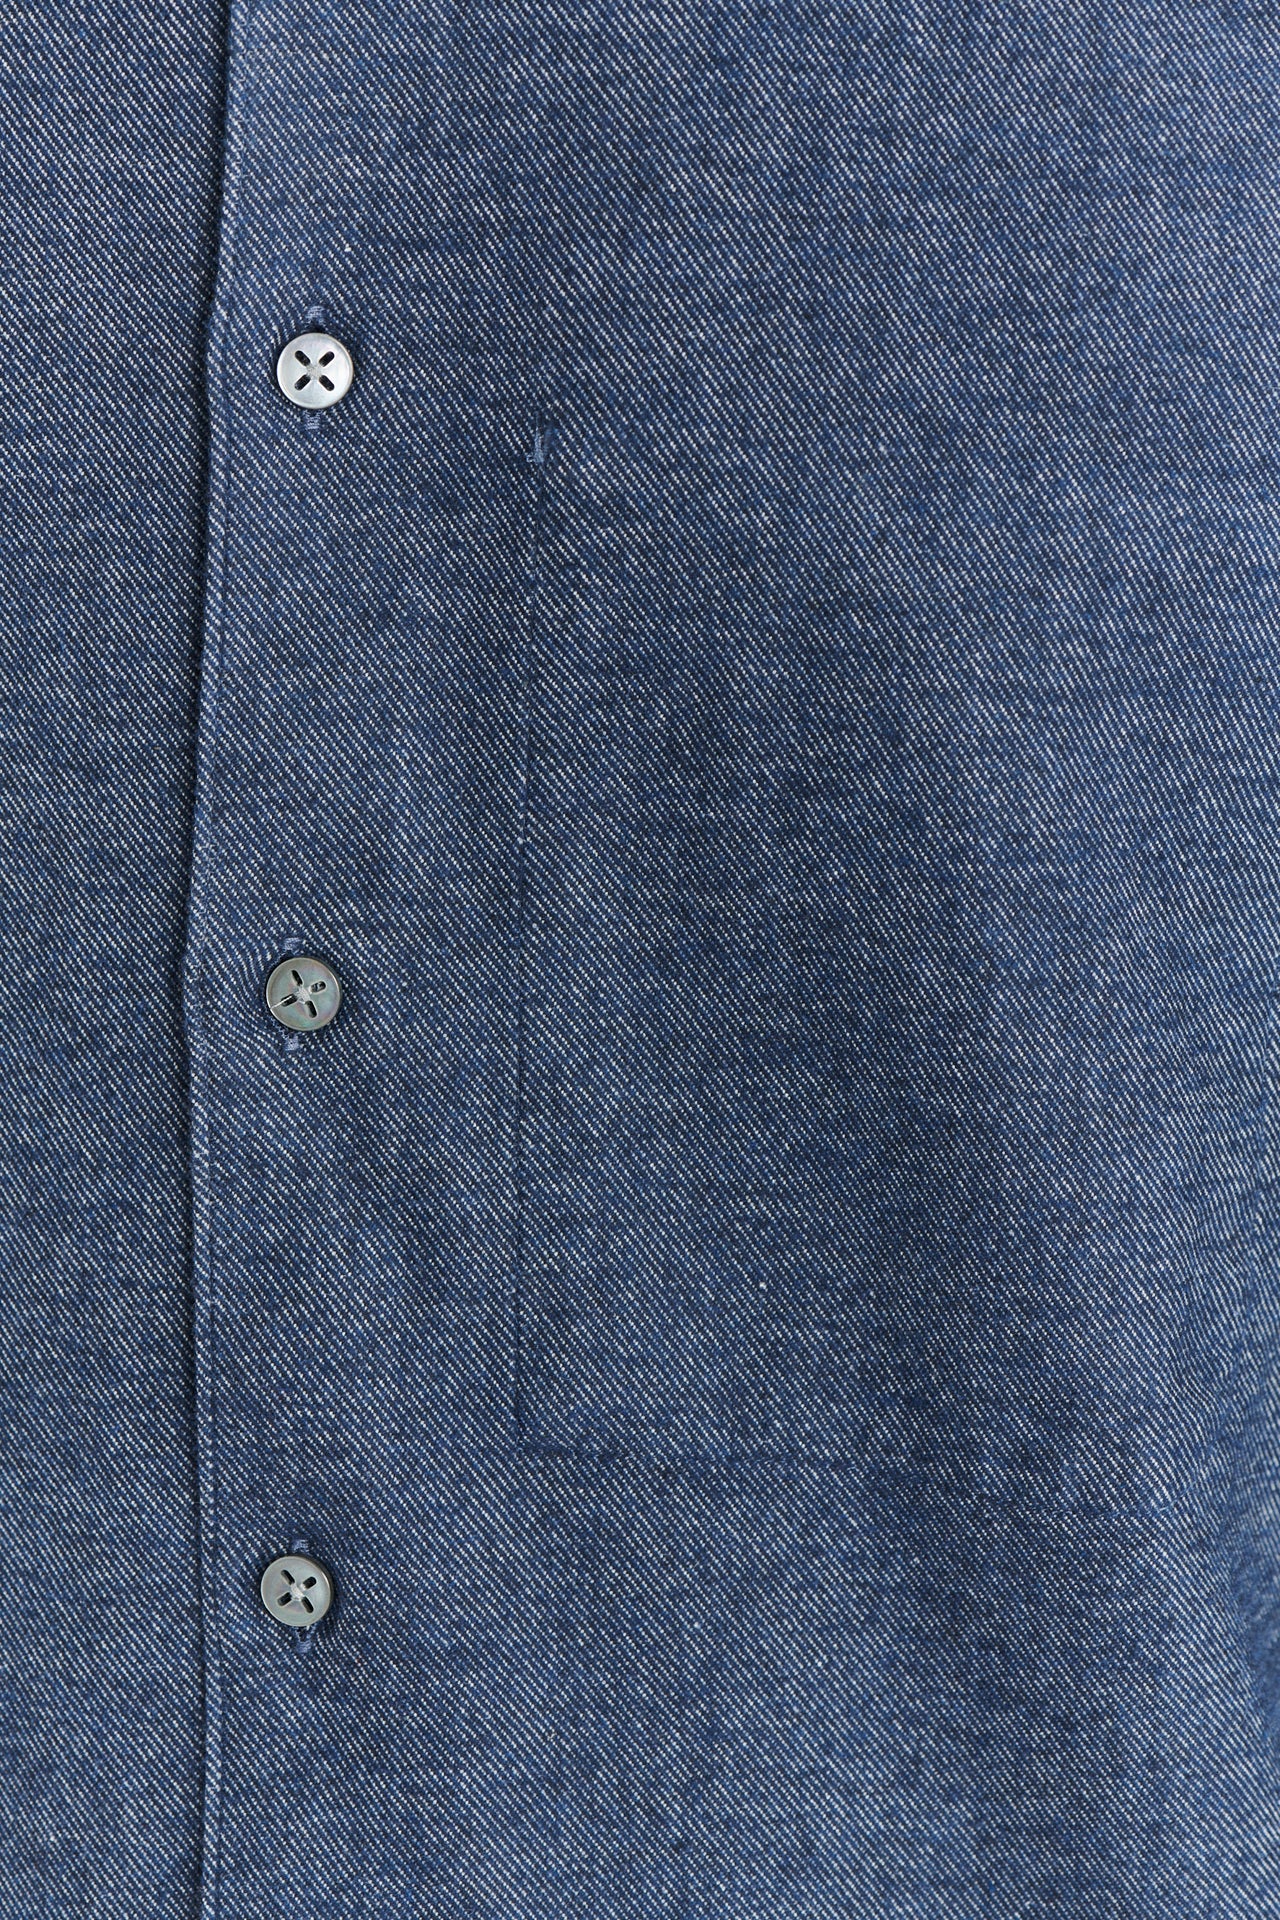 Feel Good Shirt in a Fine Italian Indigo Blue Diagonal Brushed Cotton Flannel